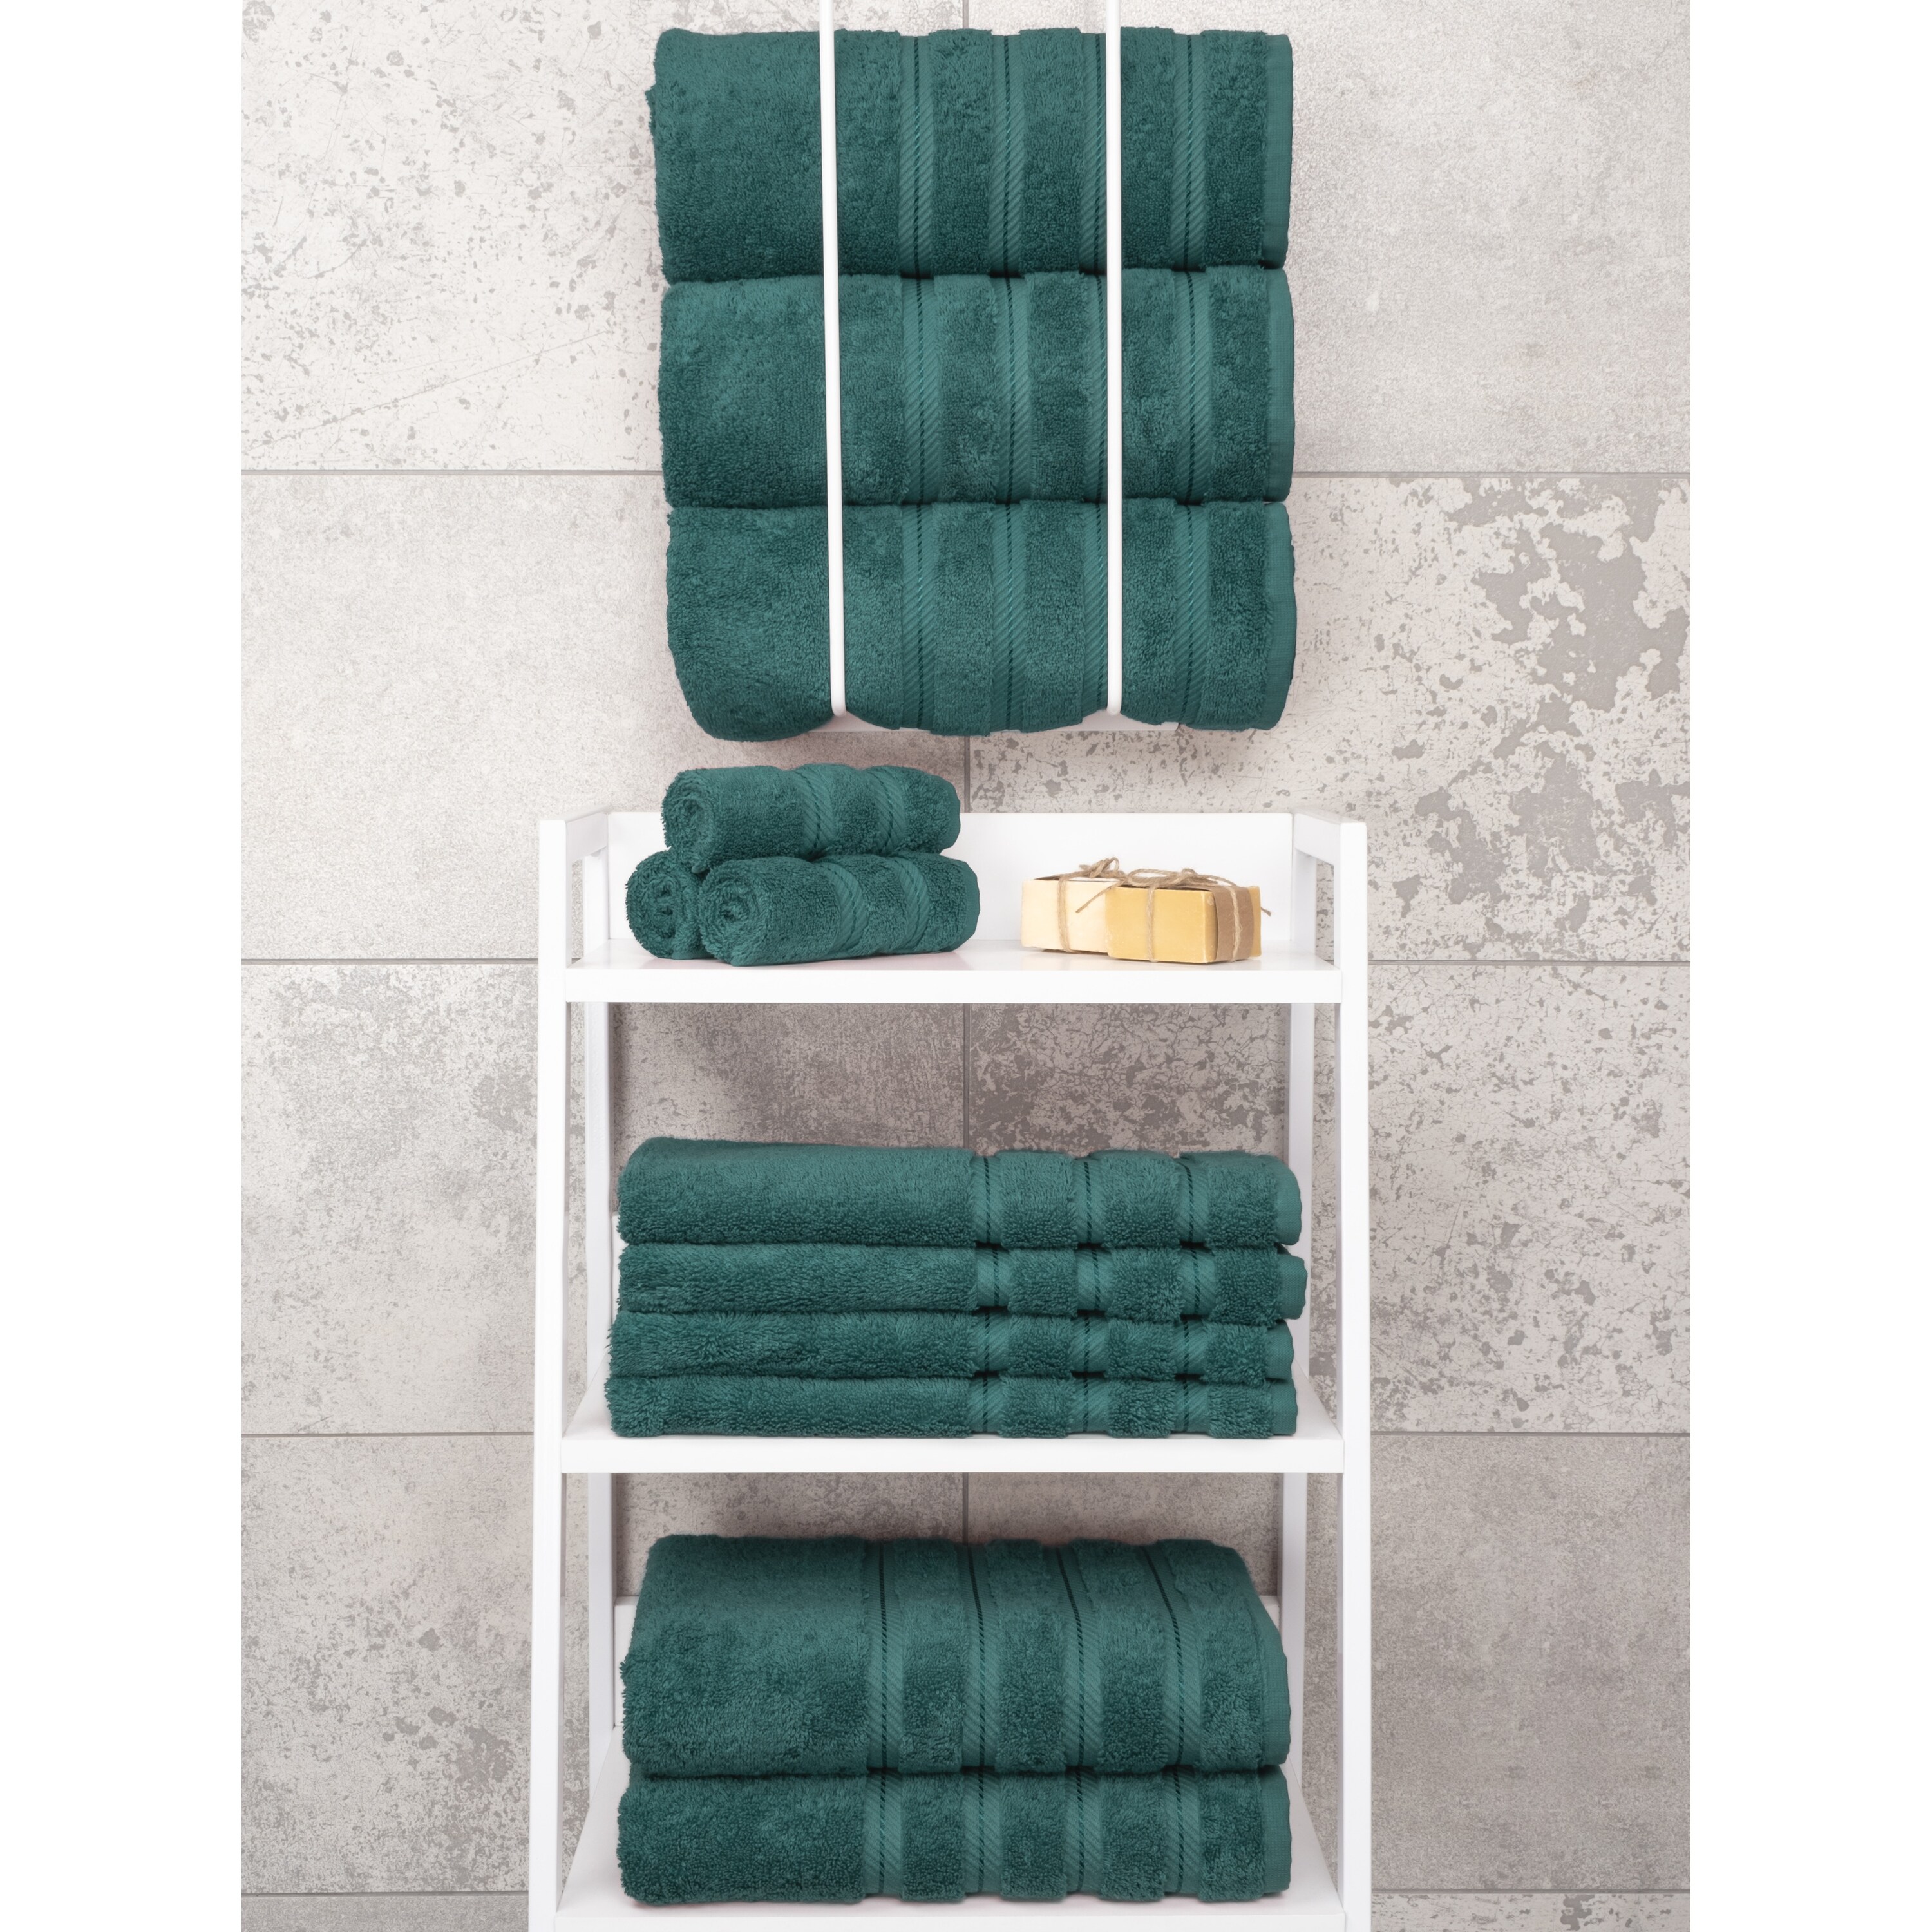 https://ak1.ostkcdn.com/images/products/is/images/direct/fd5cff4966dab789600fbced3ce73c77ea1edf00/American-Soft-Linen-Turkish-Cotton-4-Piece-Bath-Towel-Set.jpg